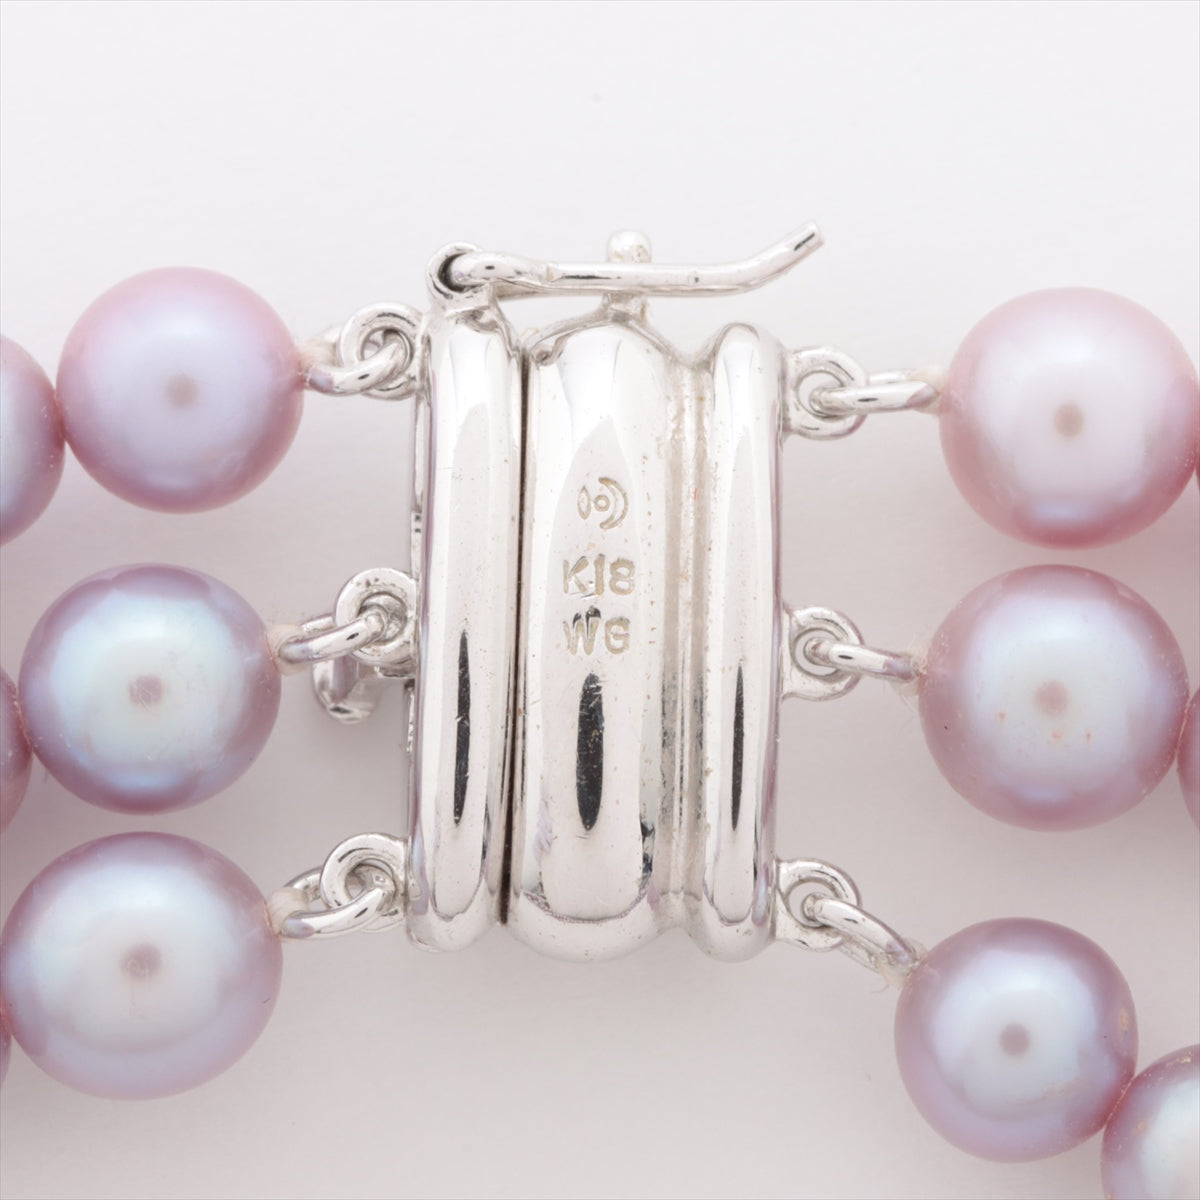 TASAKI Triple Pearls diamond Necklace K18WG Total 53.9 g